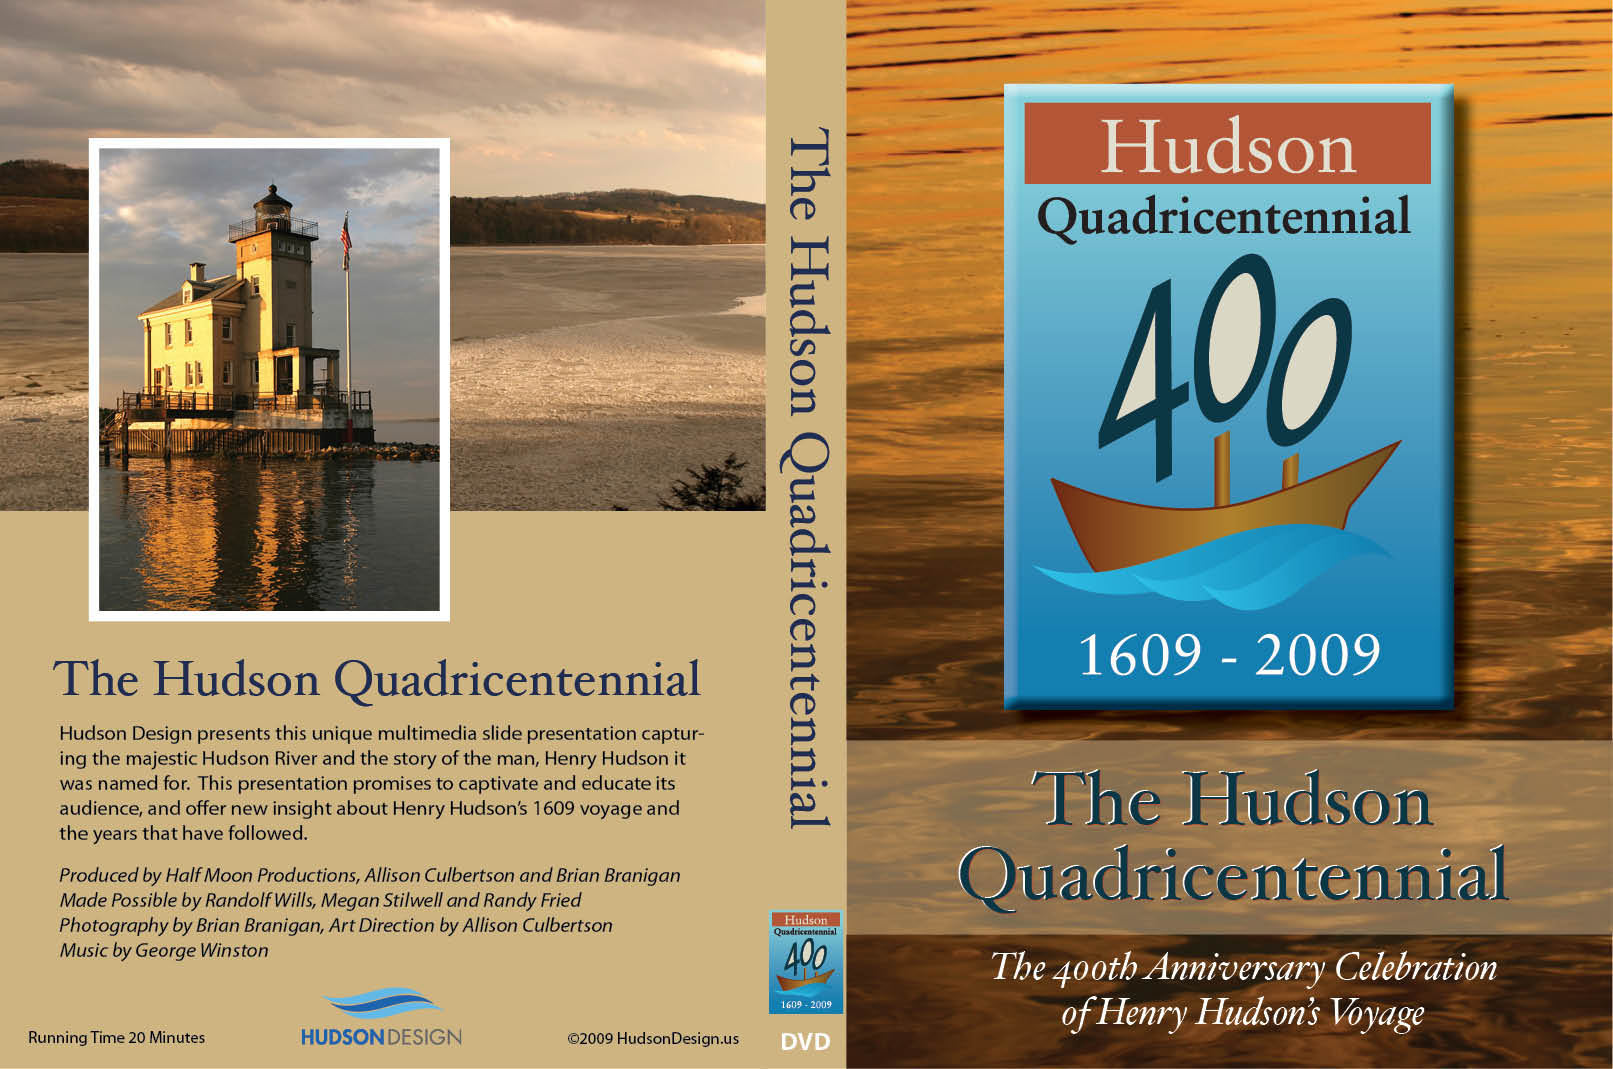 Hudson Quadricentennial DVD Cover